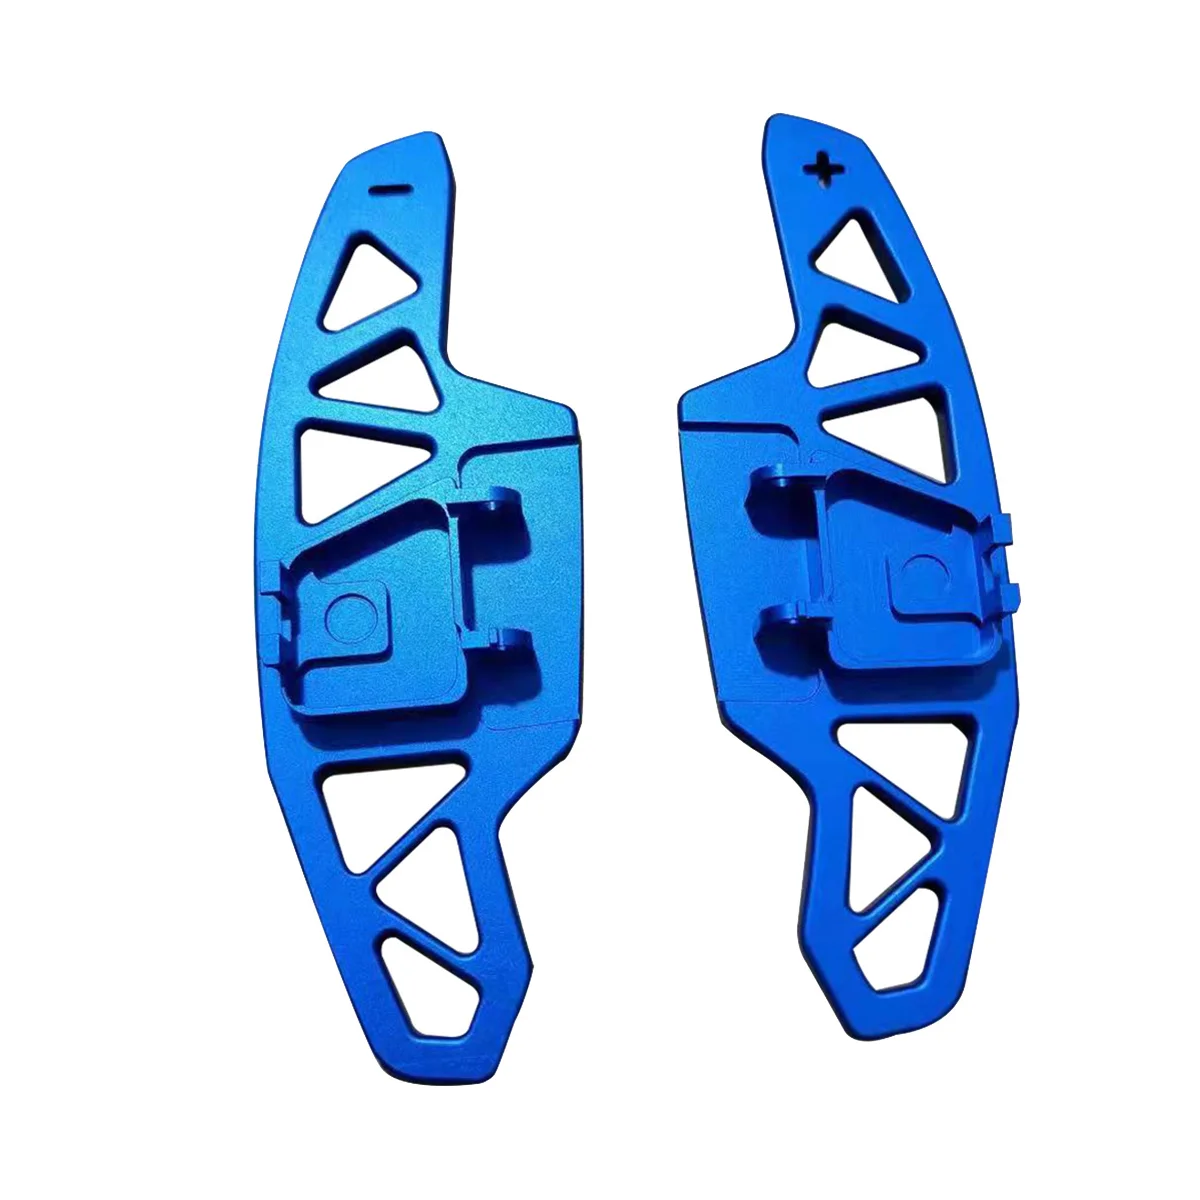 

2X Car Steering Wheel Paddle Shifter for Golf 8 MK8 ID4 Passat B8 Tiguan L DSG Gear Shift Shifter Extension Cover Blue